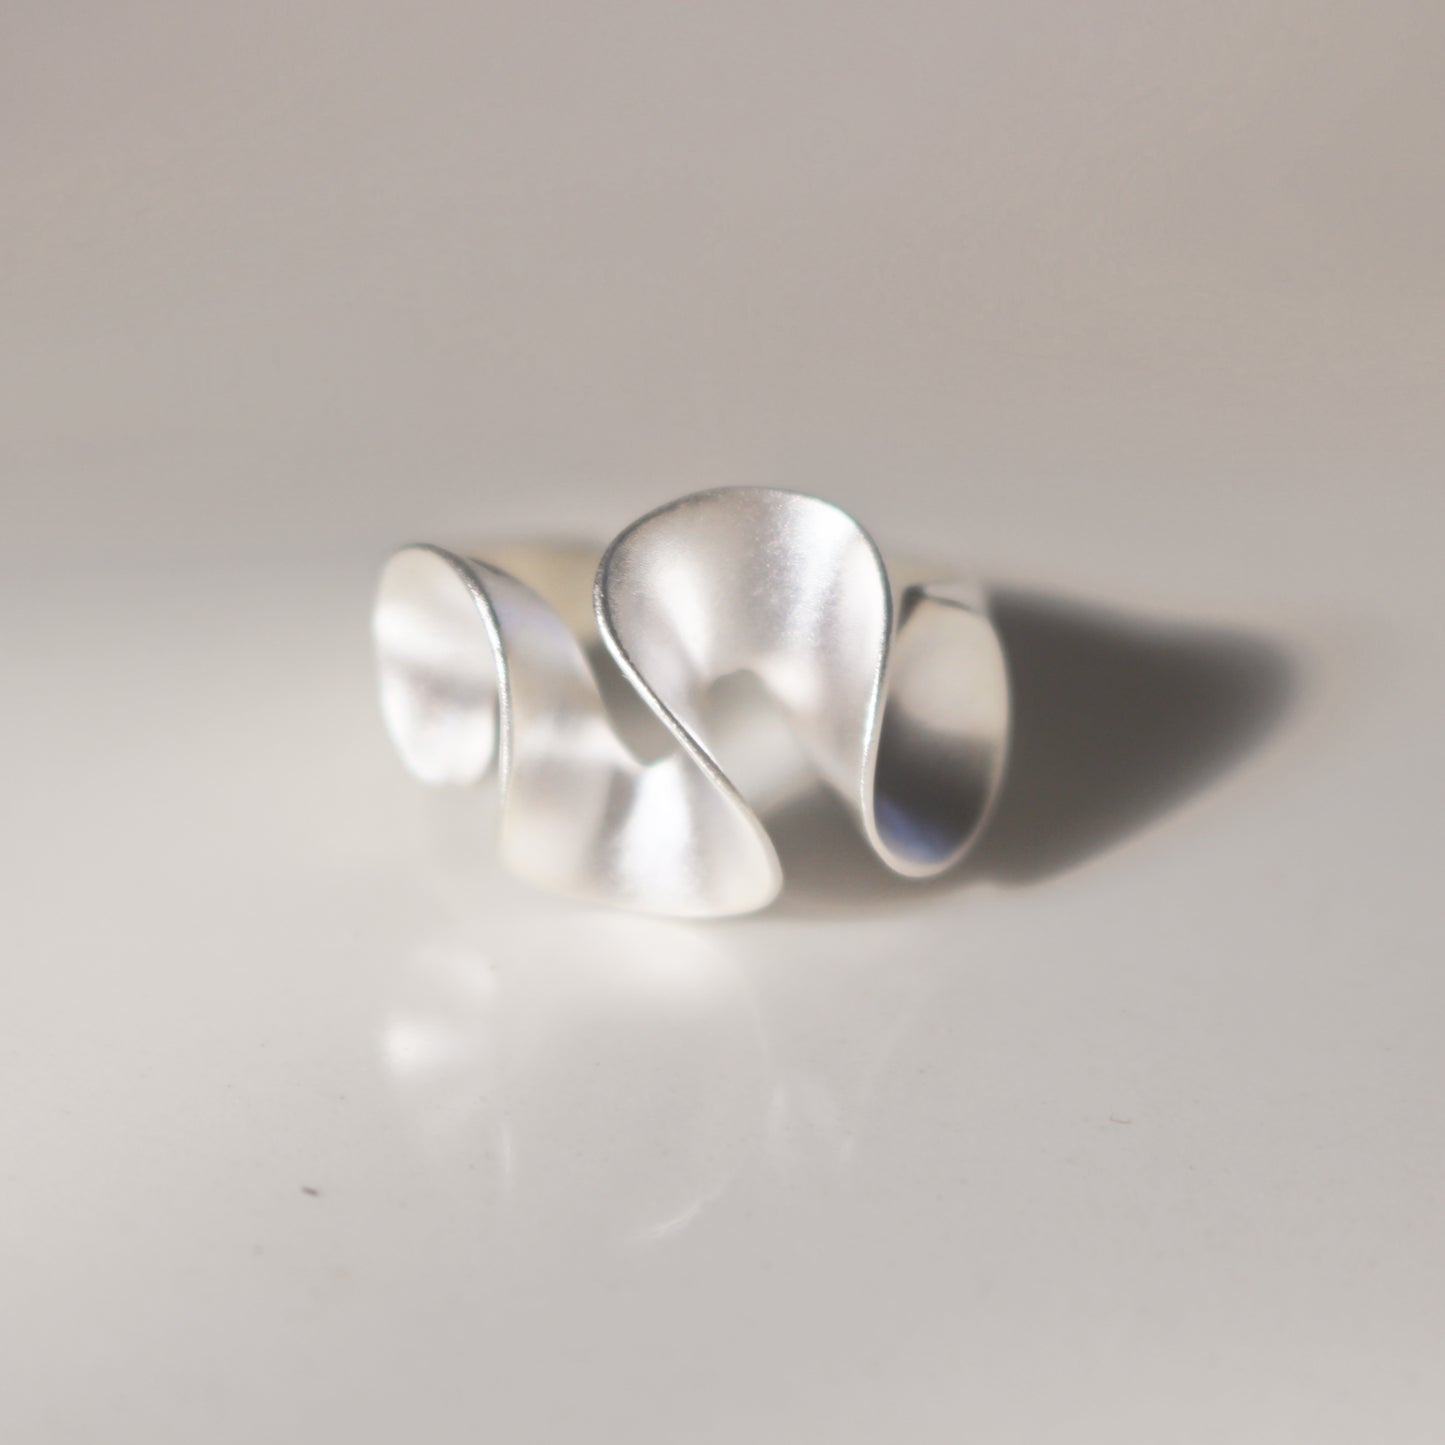 Solid 925 Sterling Silver Adjustable Ring | Minimalist Ribbon Spiral Twist Ring